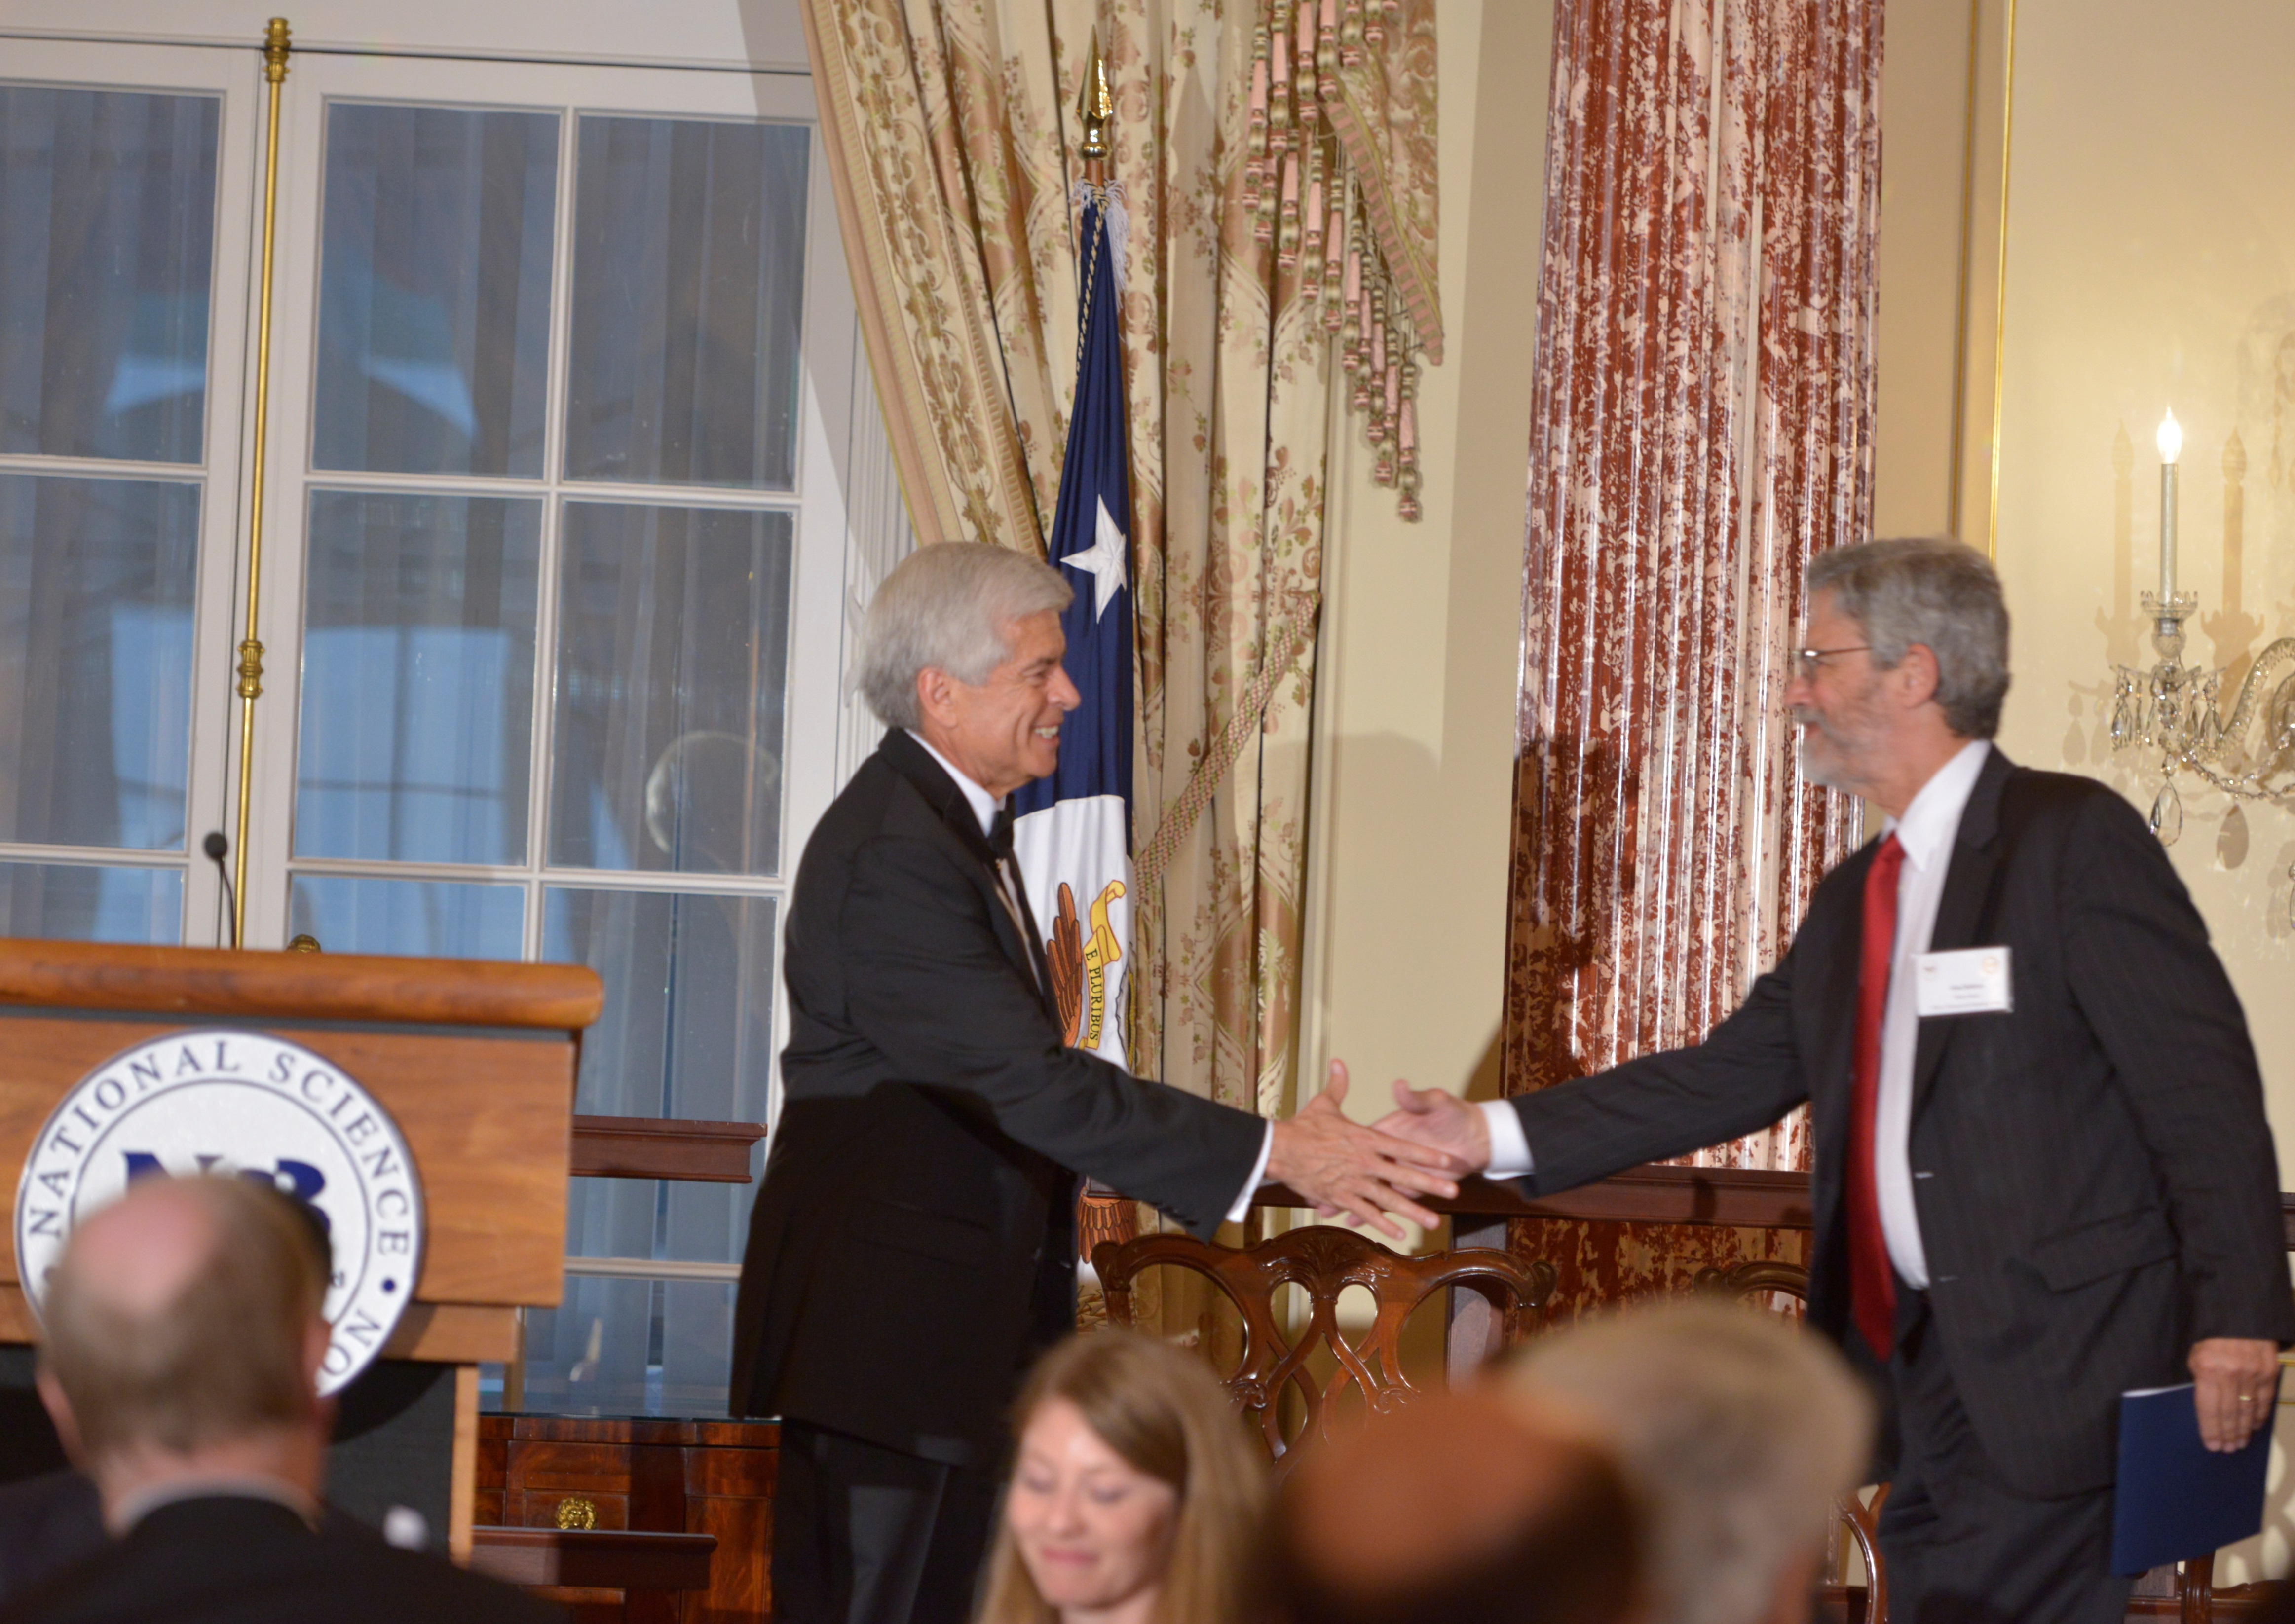 Arvizu welcomes President Obama's Science Advisor John Holdren to the podium